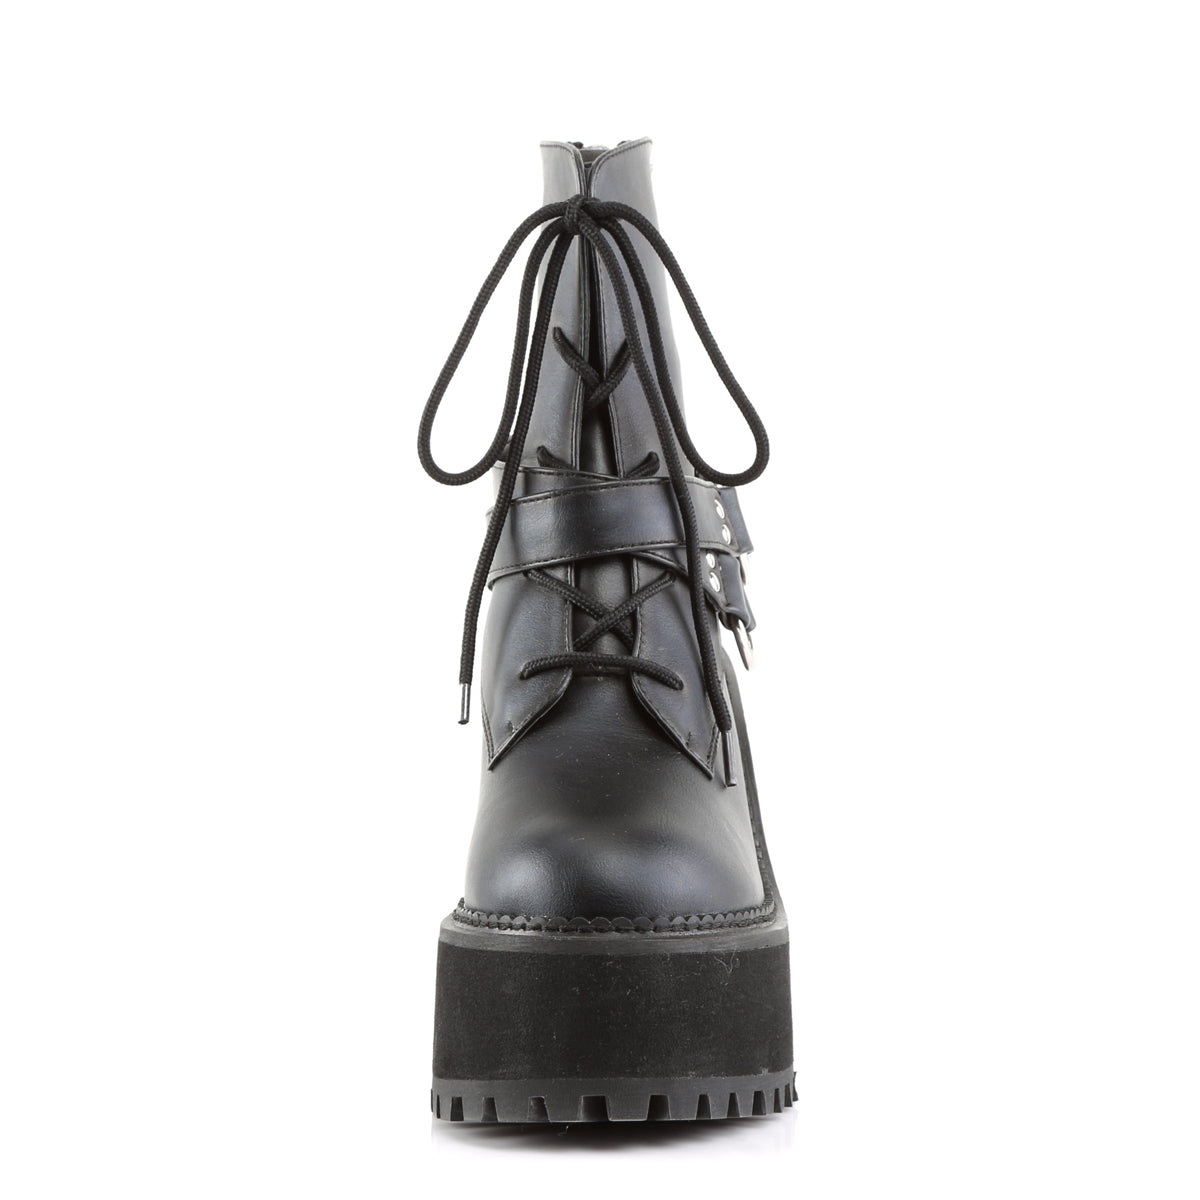 DemoniaCult Womens Ankle Boots ASSAULT-101 Blk Vegan Leather